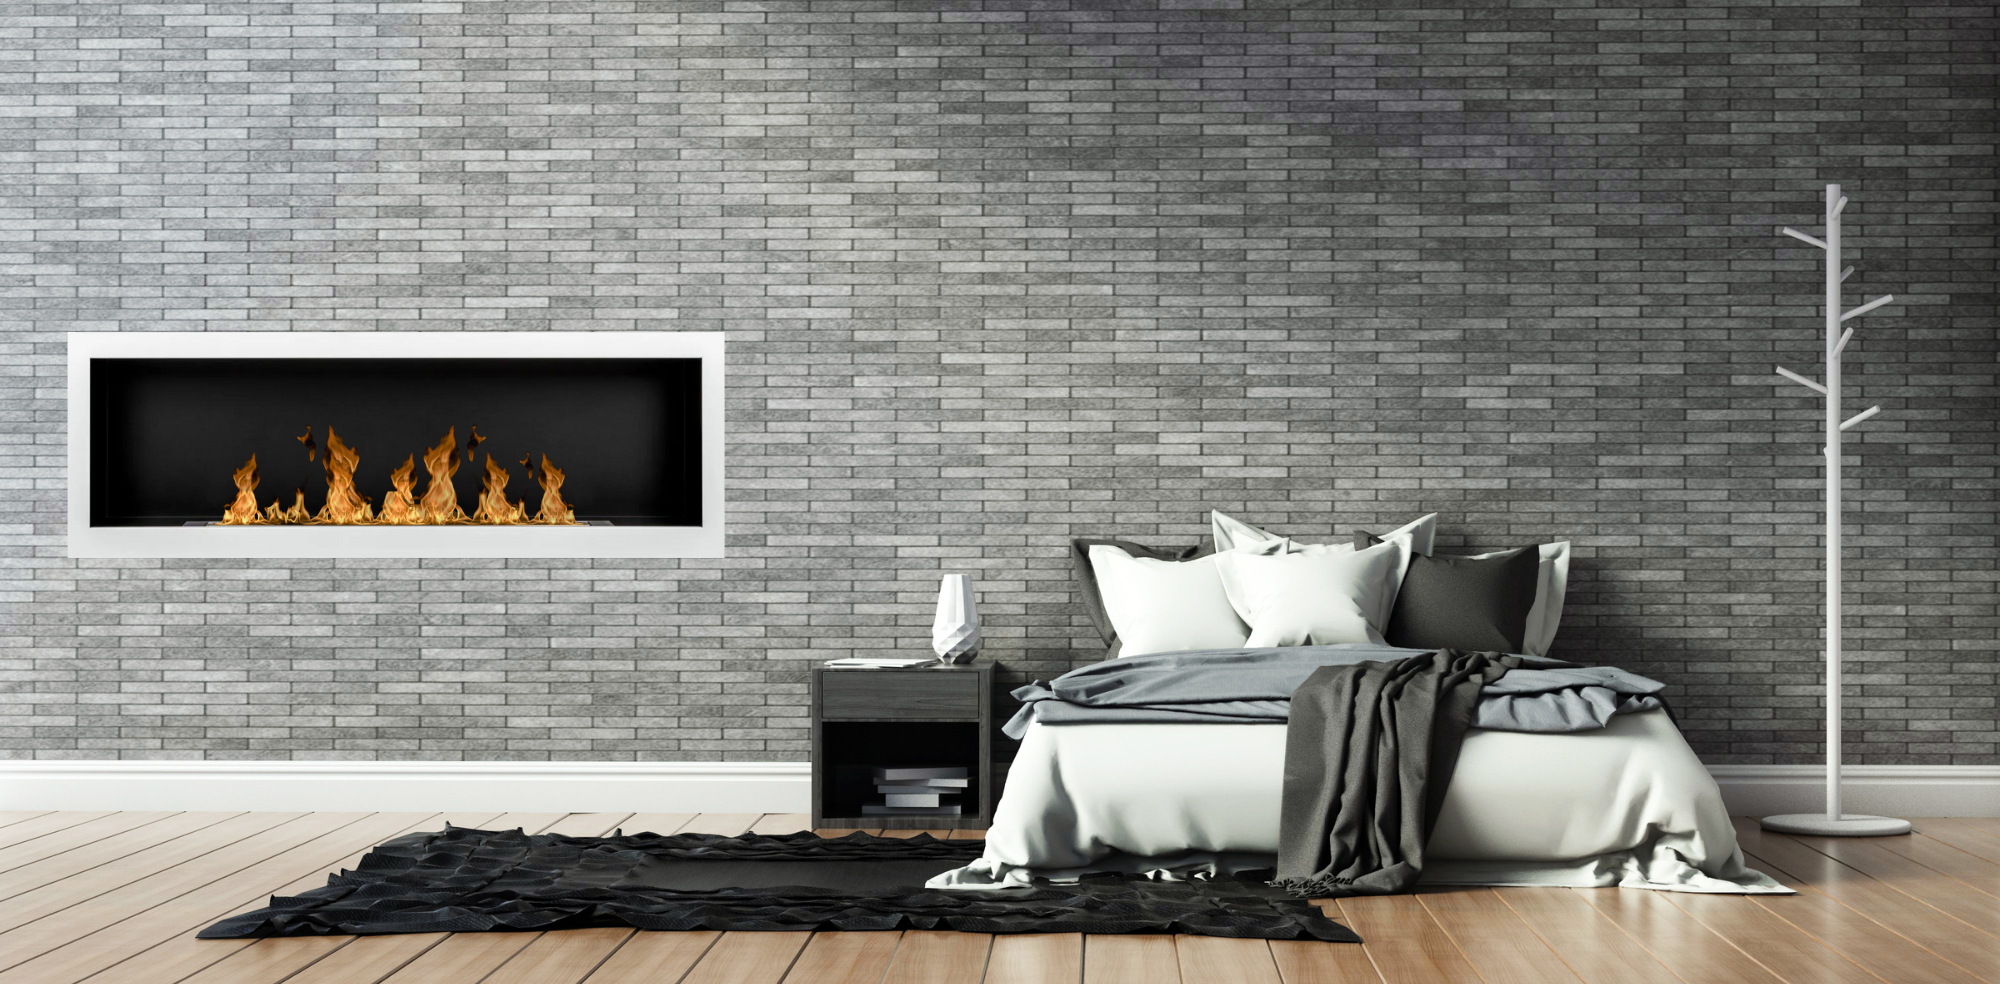 S - Line White Full BOX Bio-Ethanol Wall Fireplace 120 x 40 CM